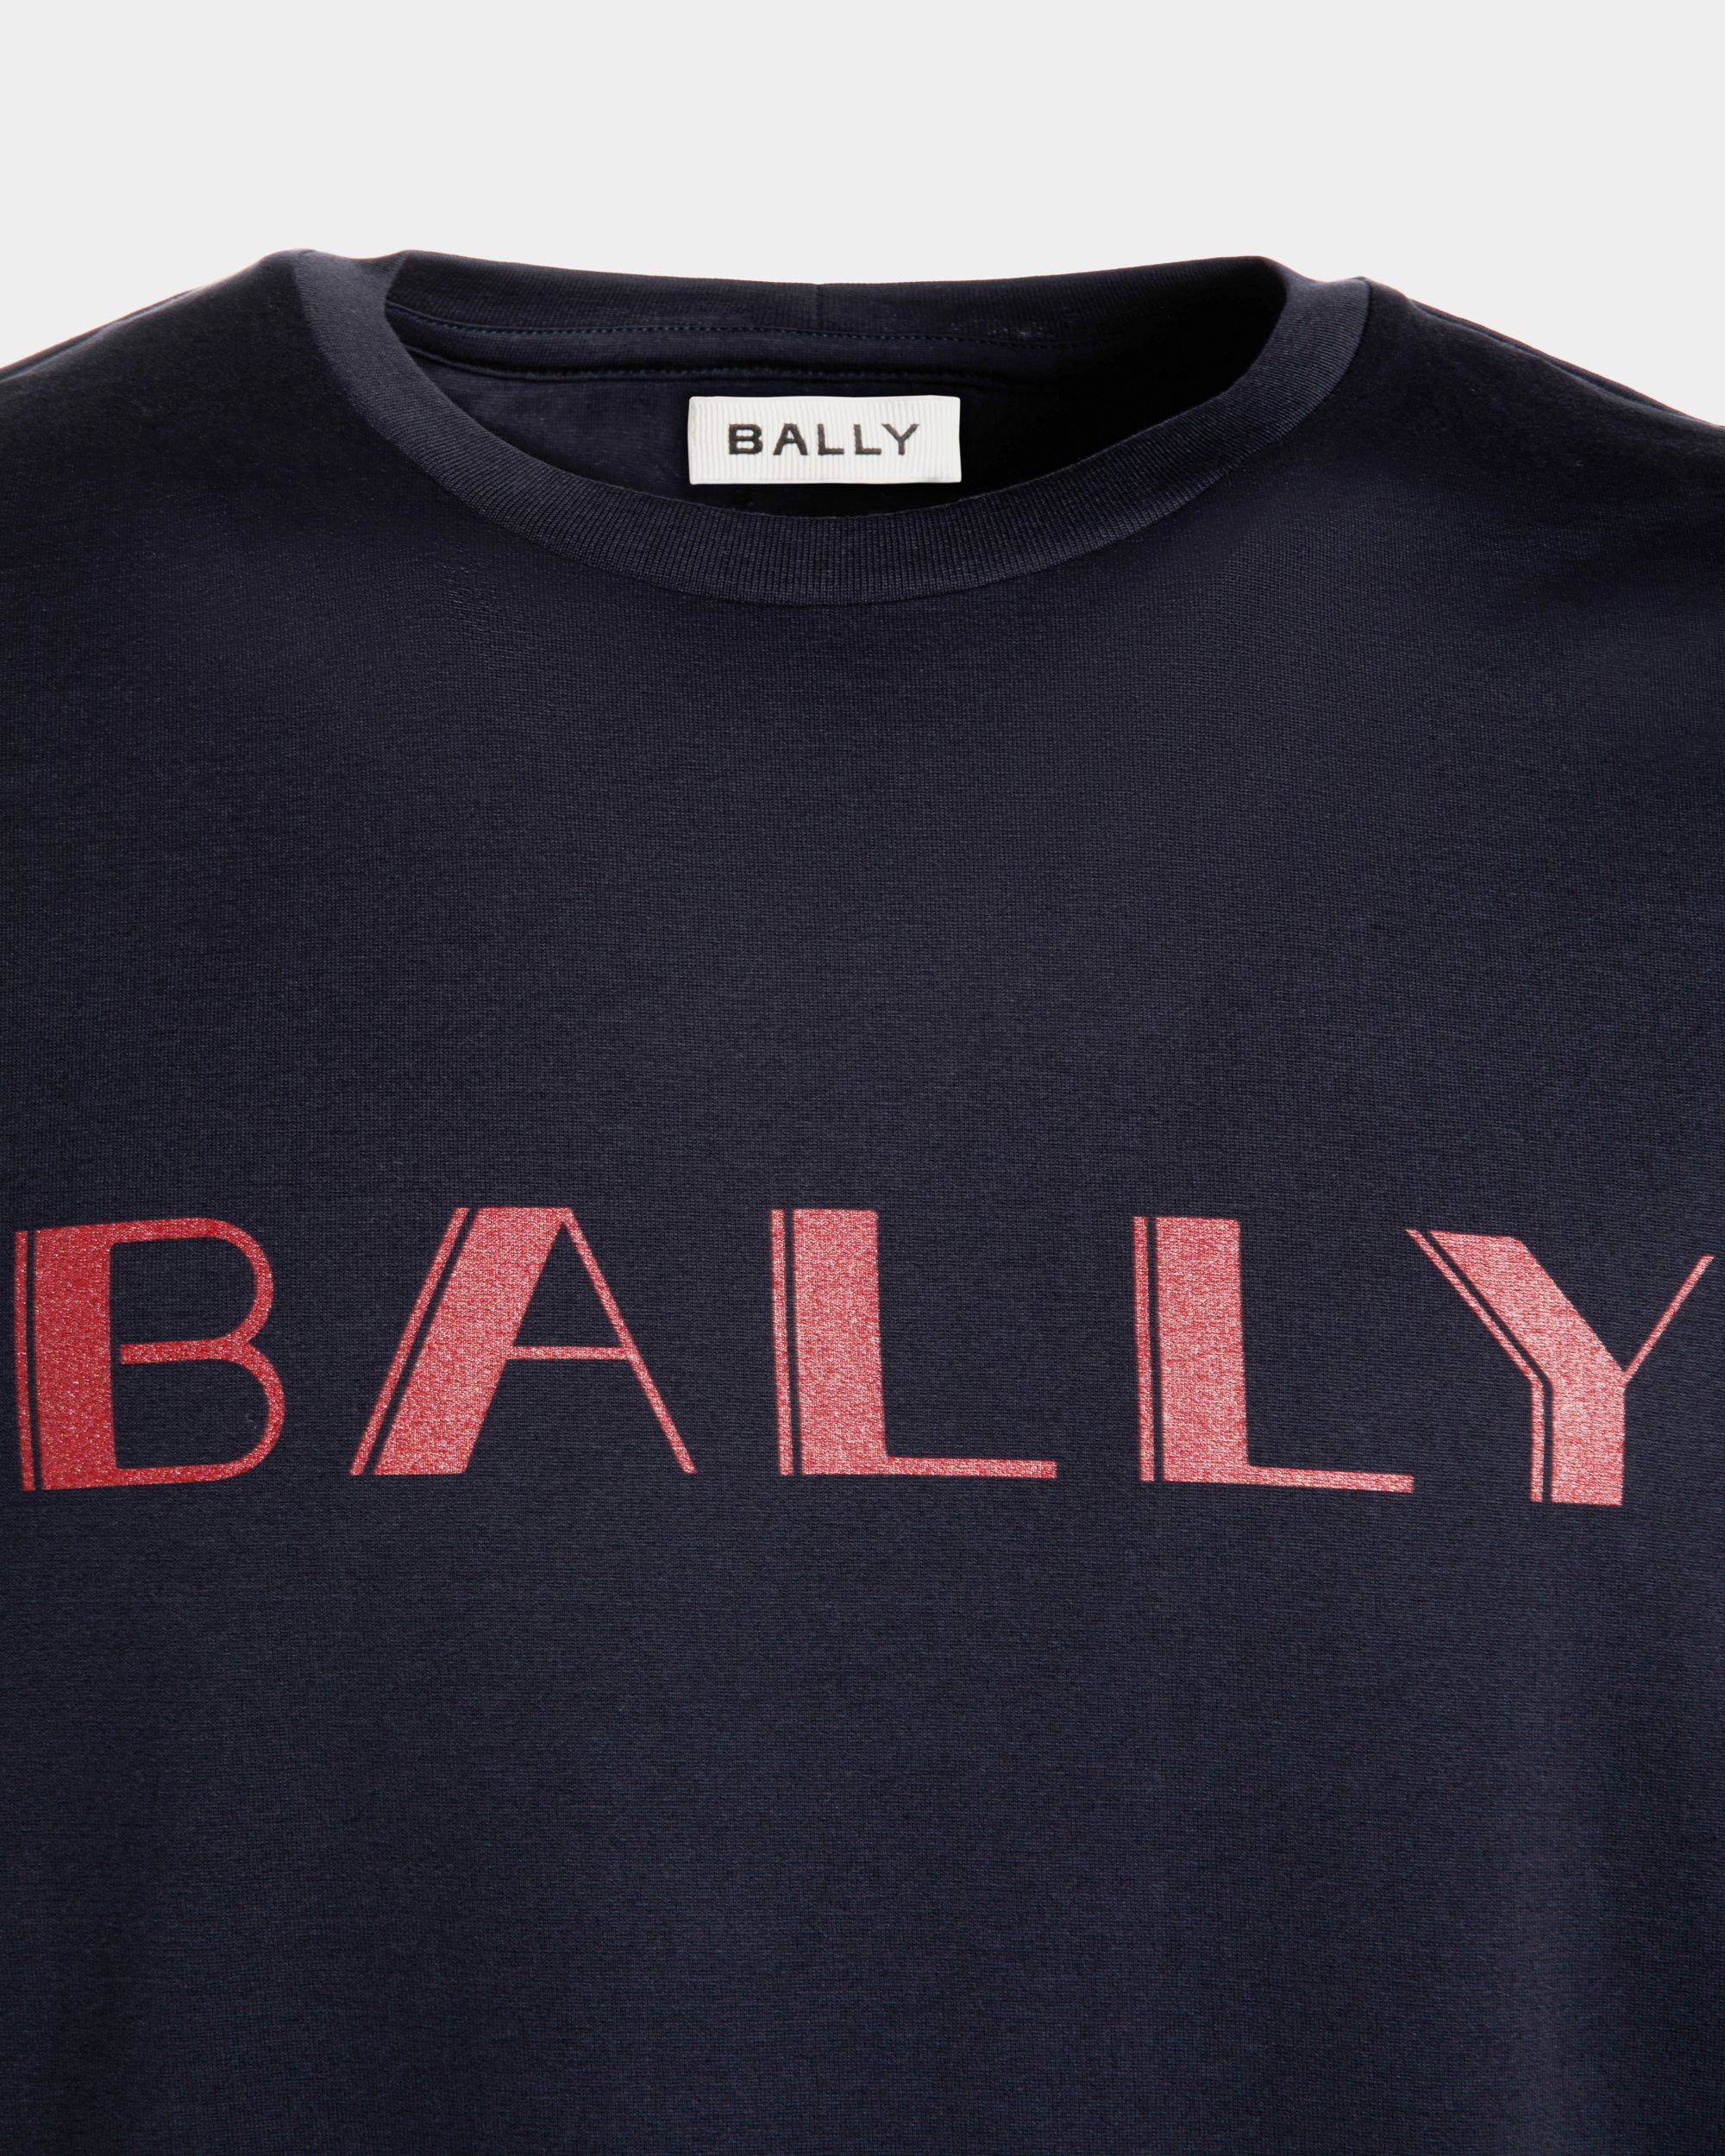 Summer Capsule T-Shirt Aus Baumwolle In Marineblau - Herren - Bally - 02